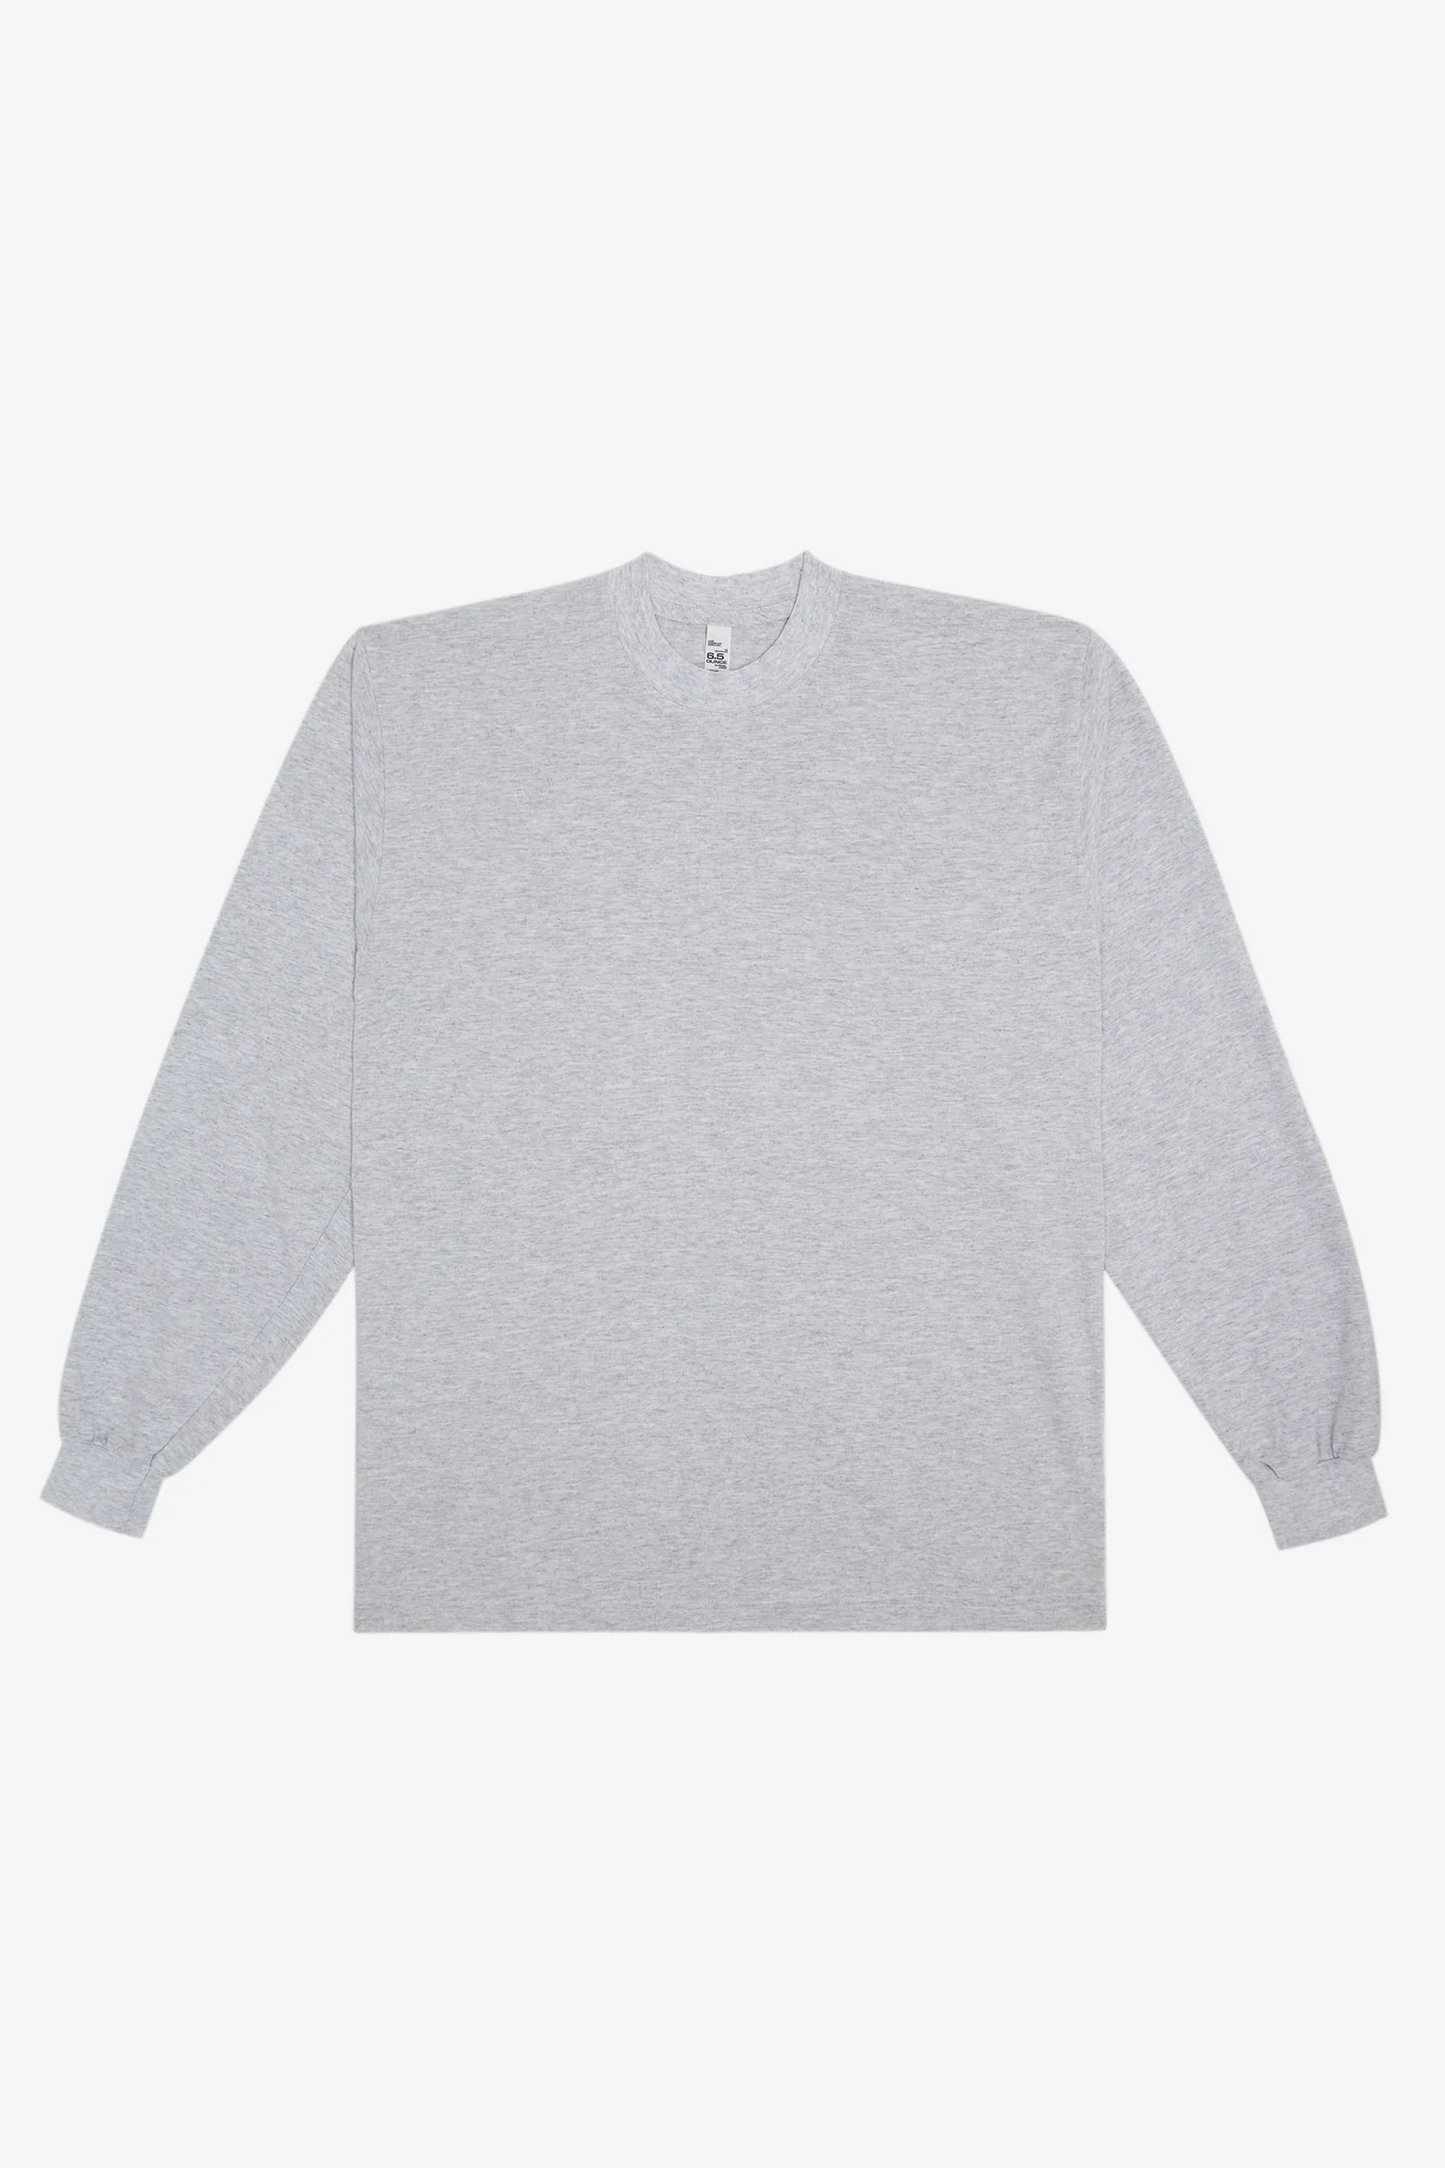 1807GD - 6.5oz Long Sleeve Garment Dye Crew Neck T-Shirt (New)